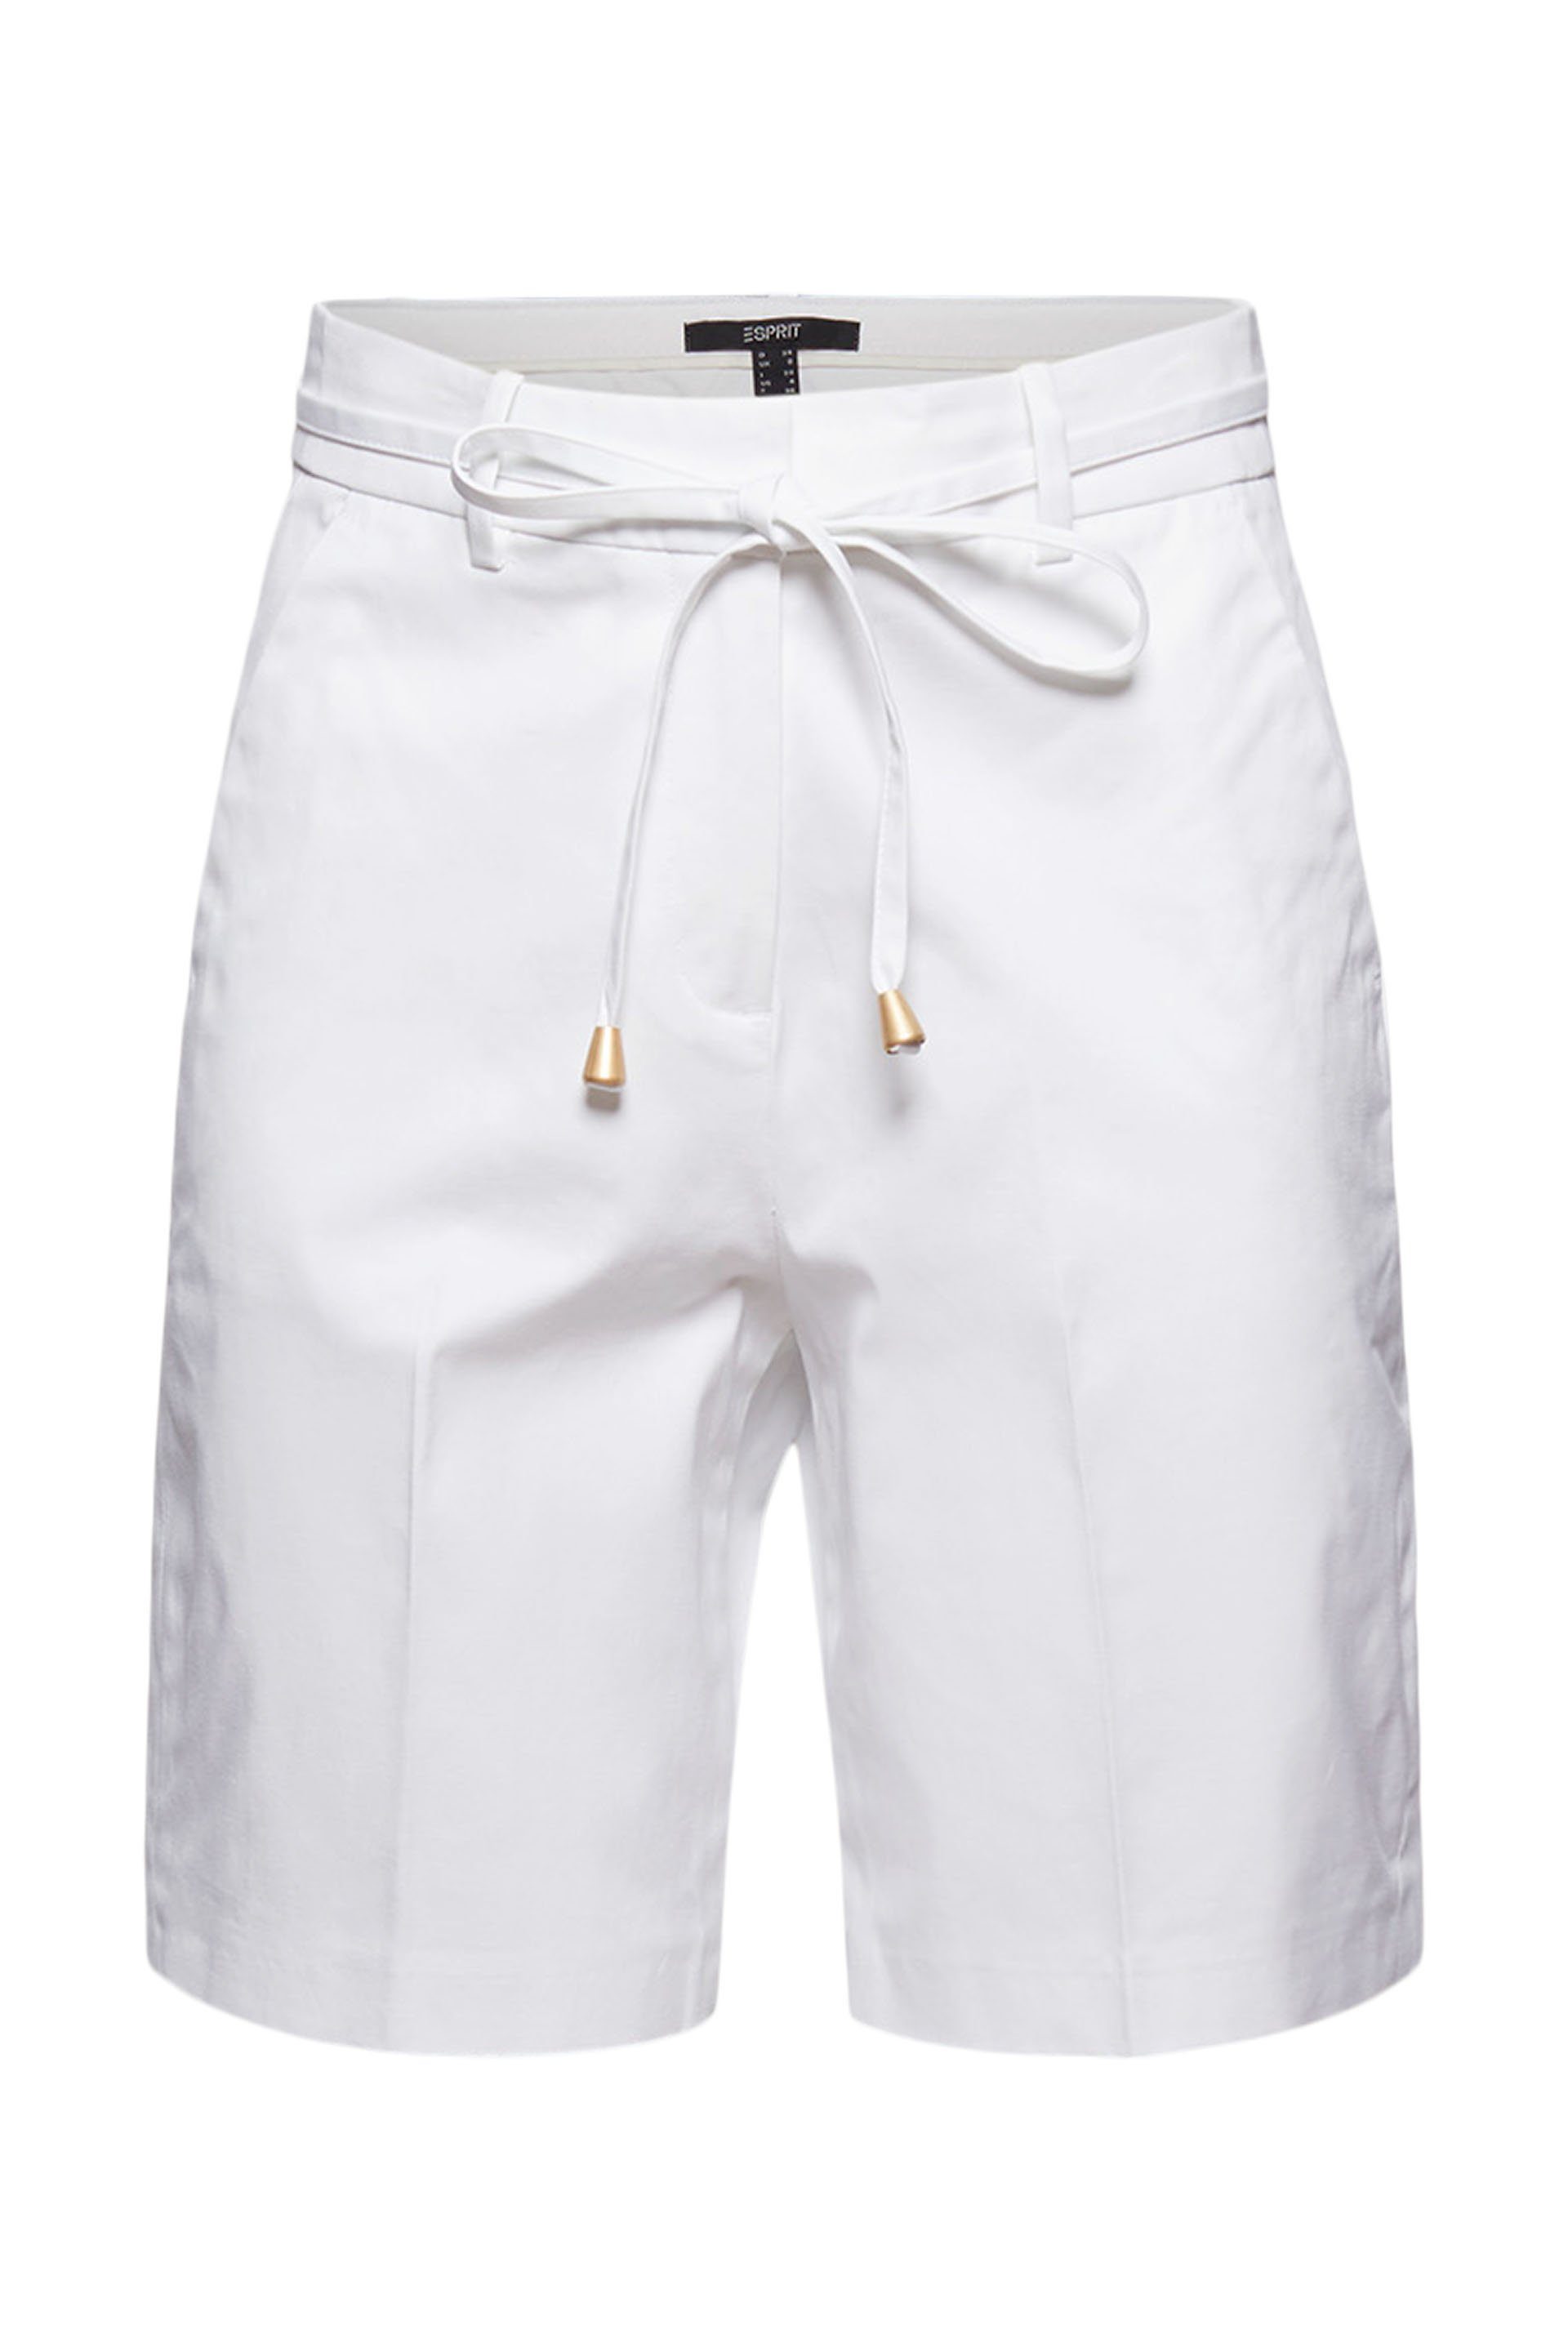 white Esprit Shorts Collection